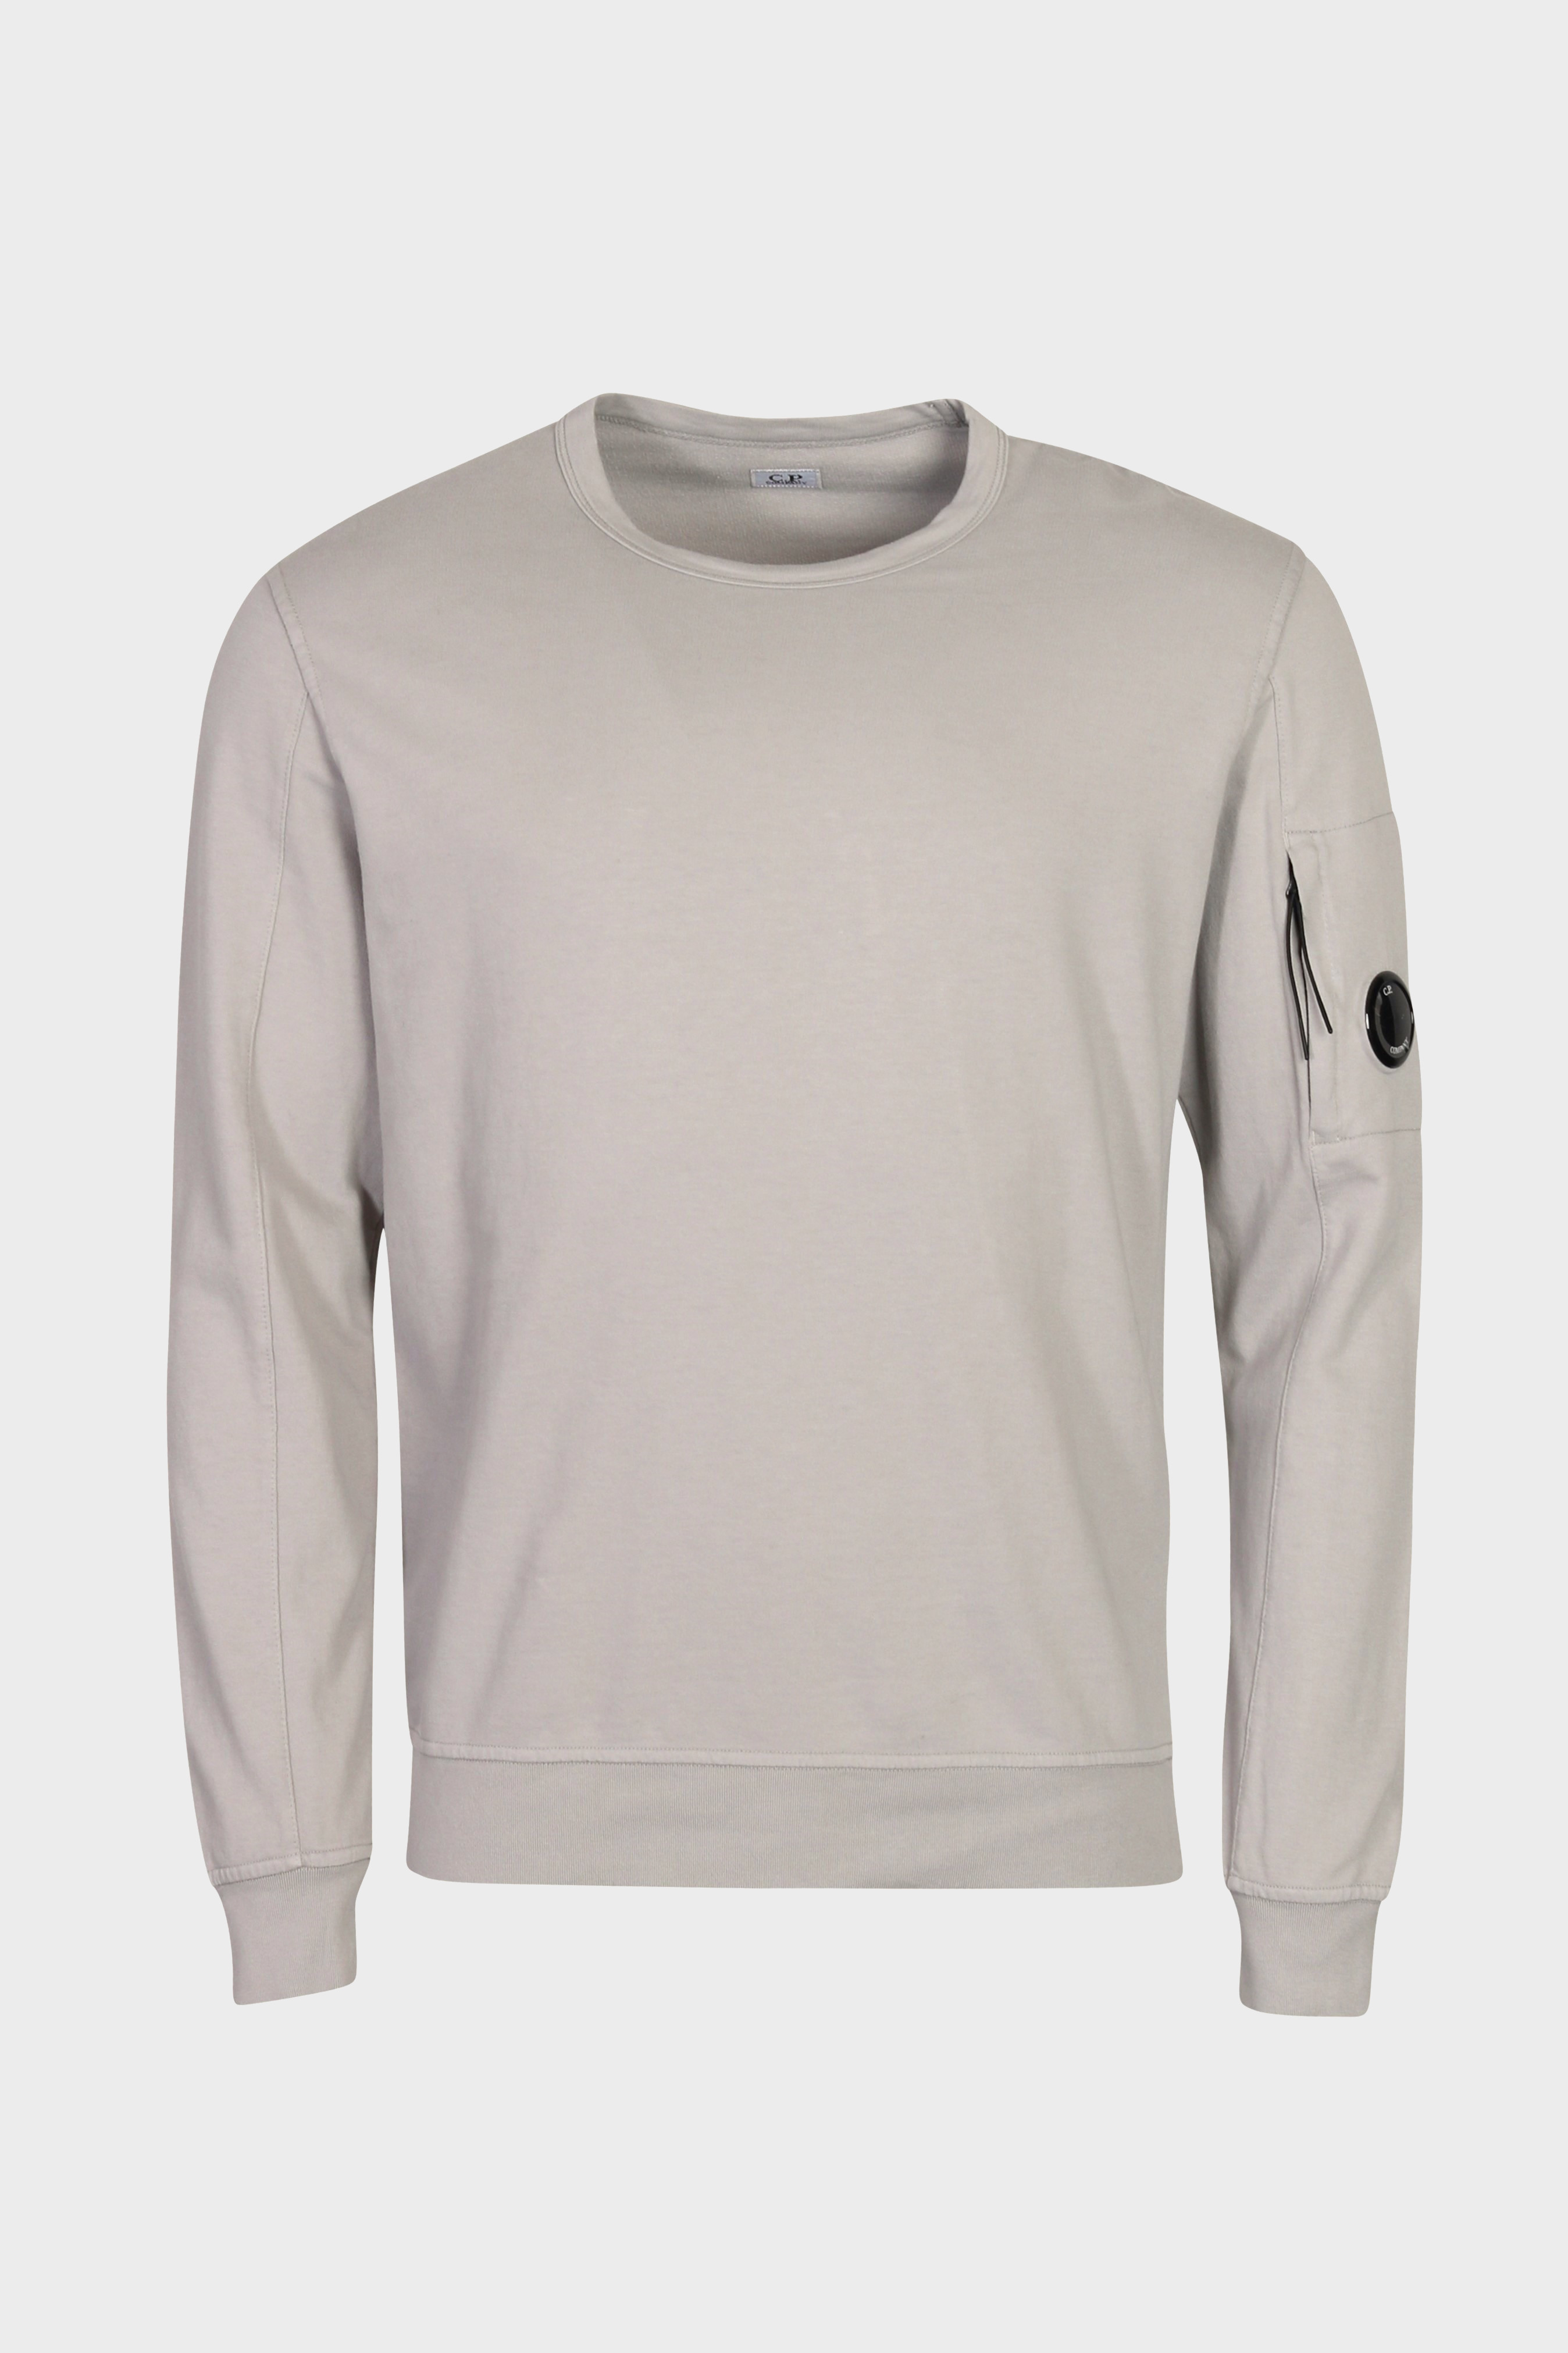 C.P. COMPANY Light Fleece Sweatshirt in Drizzle Grey XXL